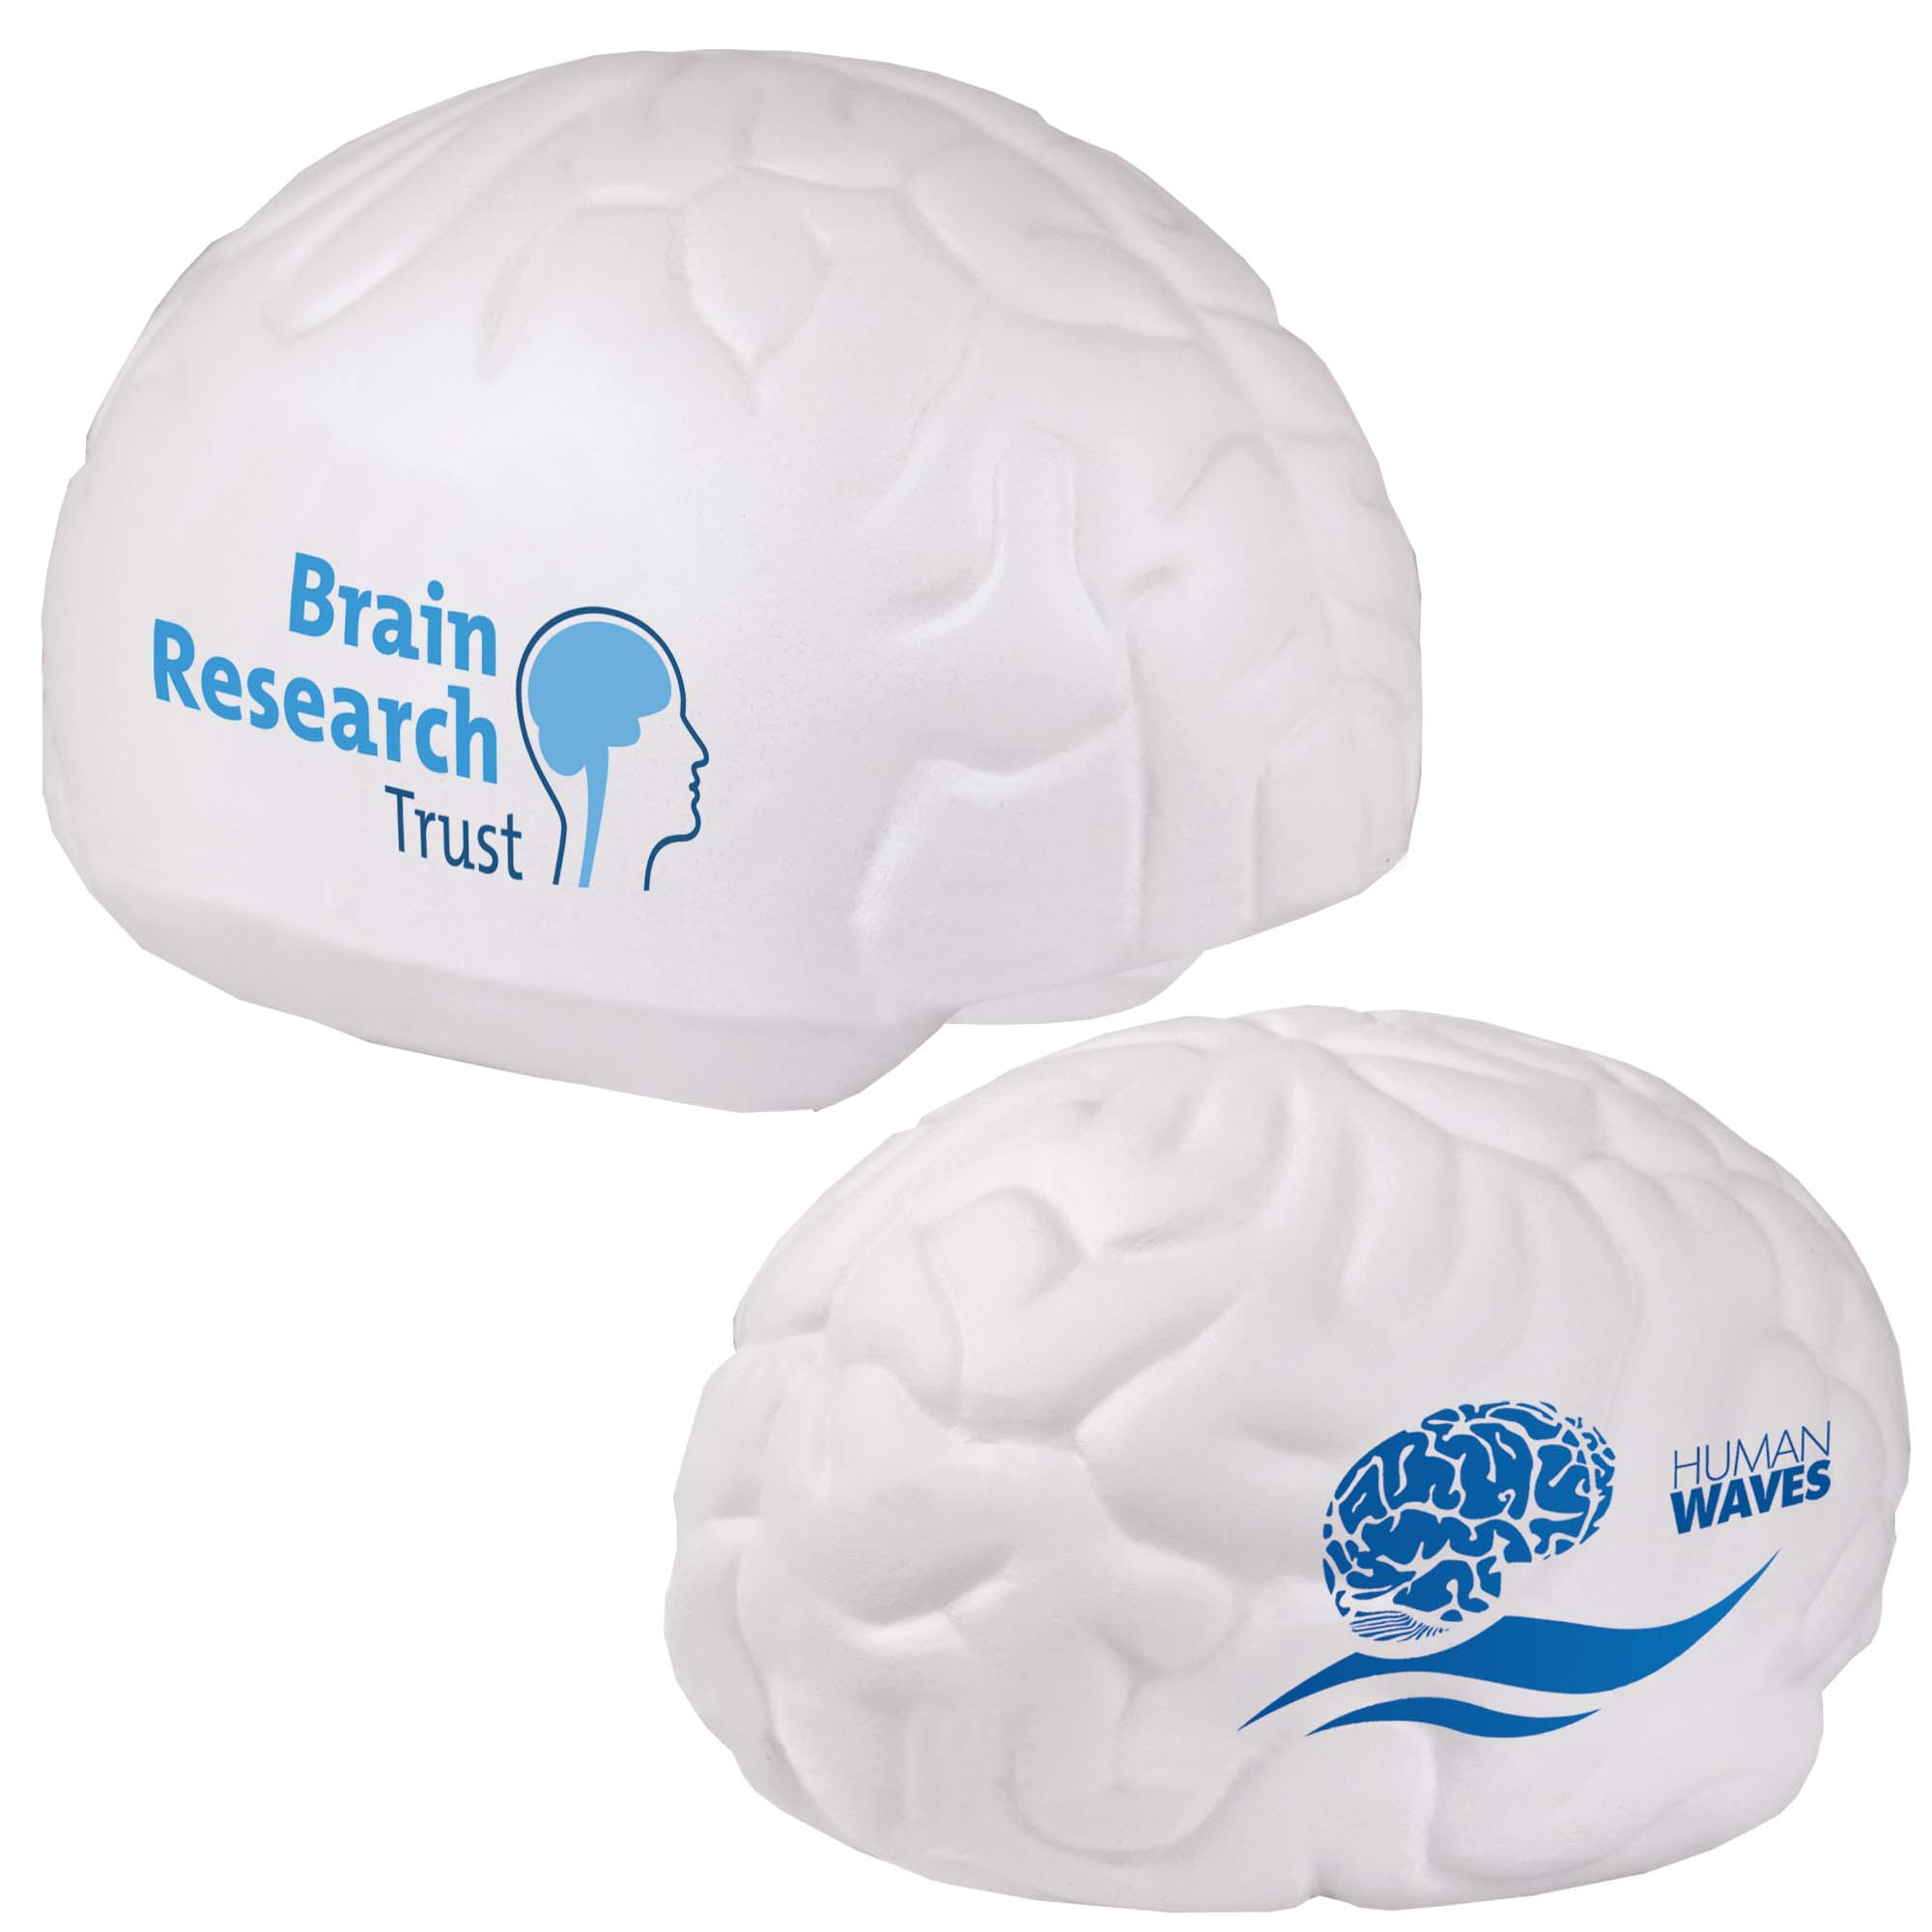 Promotional Brain